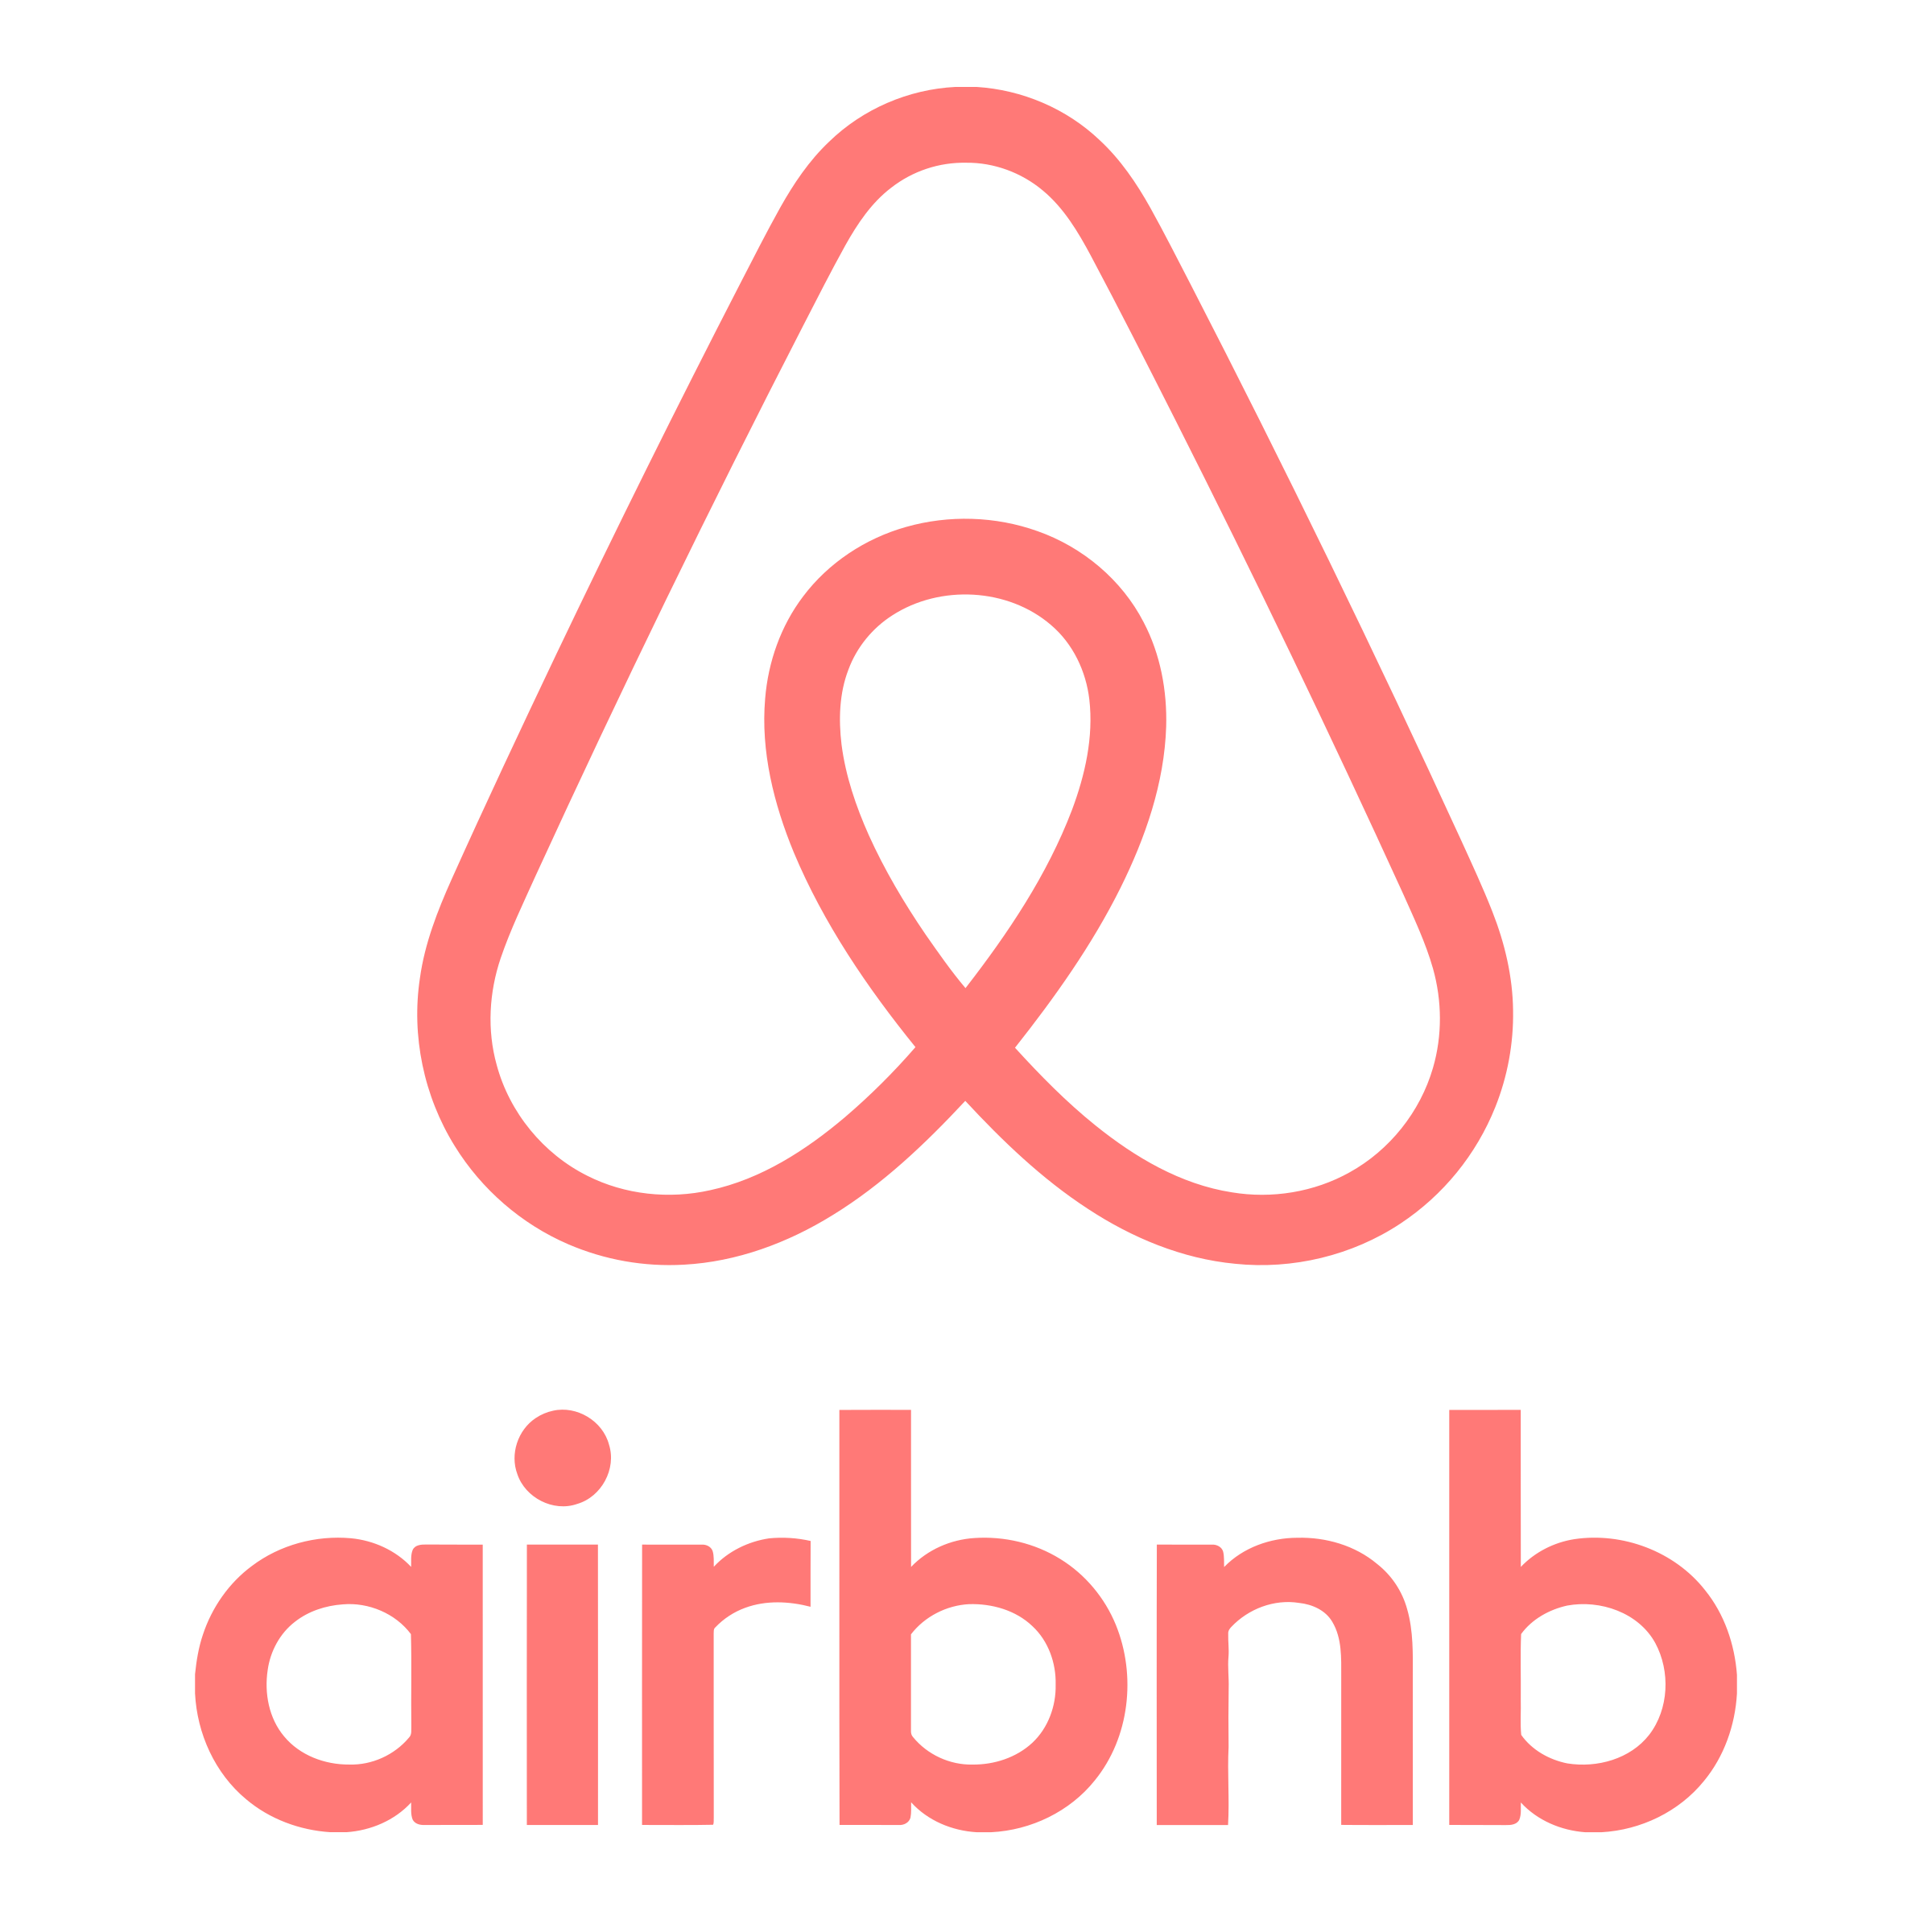 airbnb-2-logo-png-transparent.png